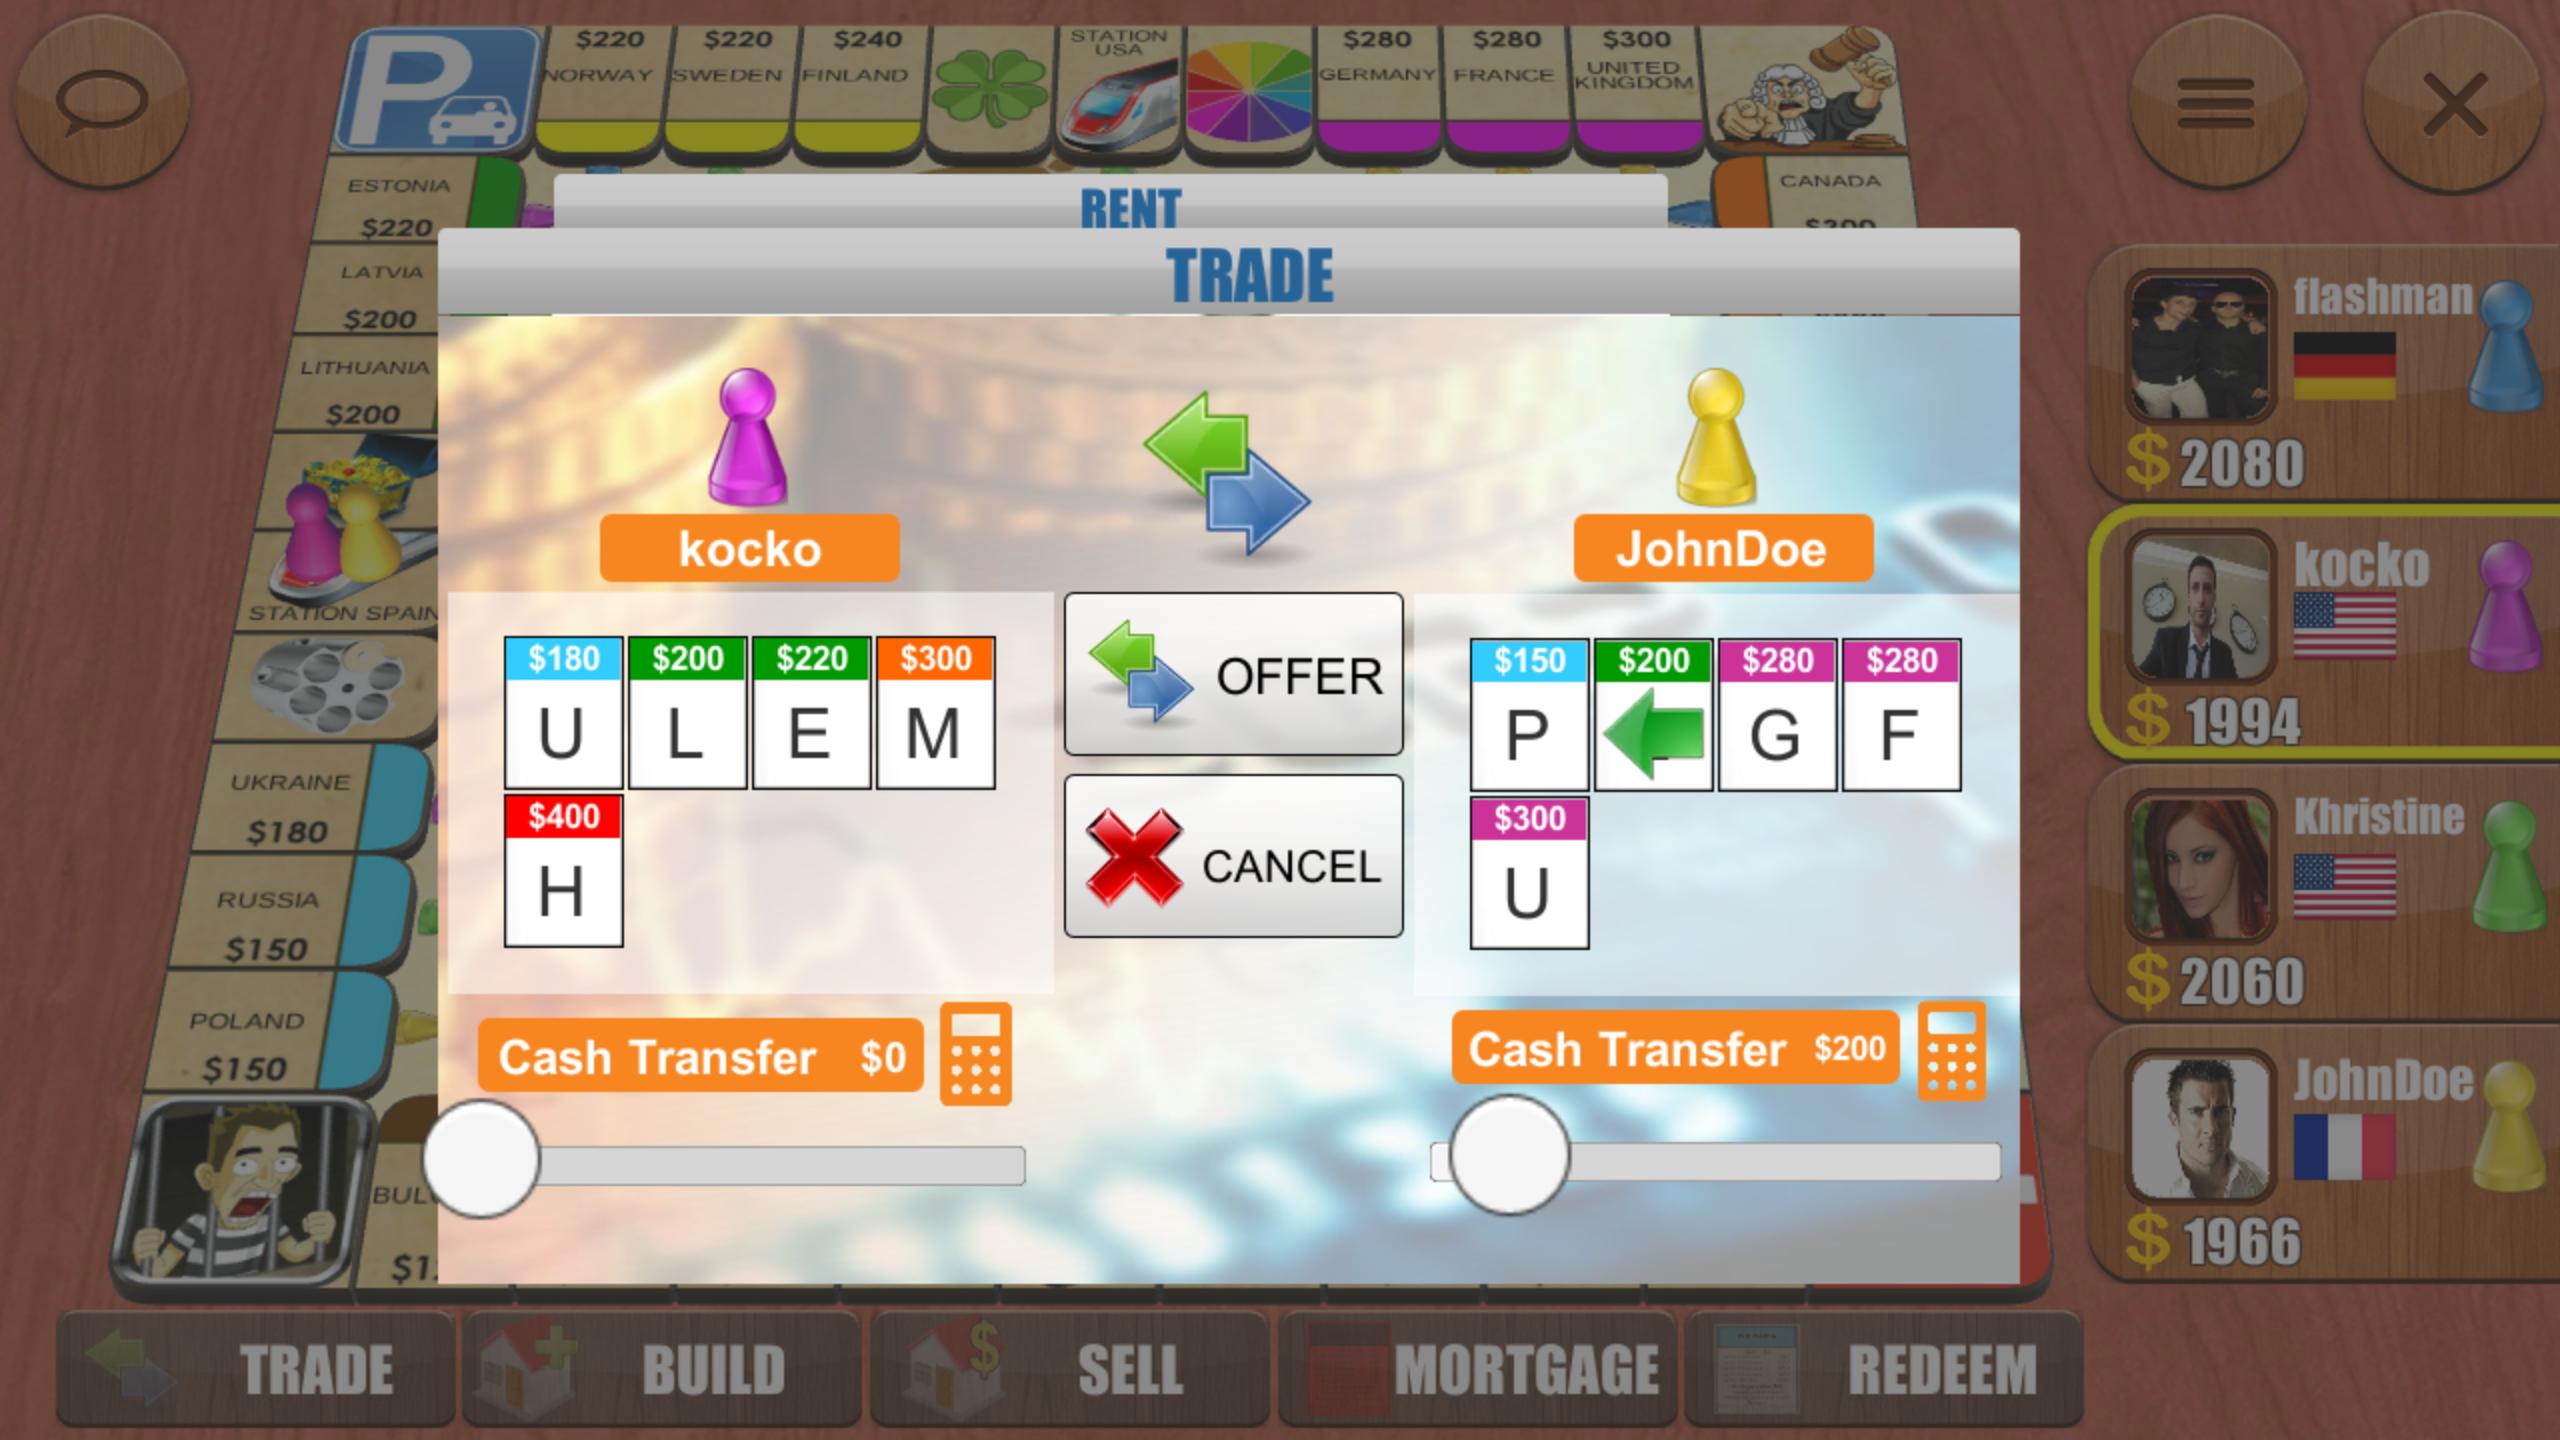 Rento Dice Board Game Online 5.1.9 Screenshot 11